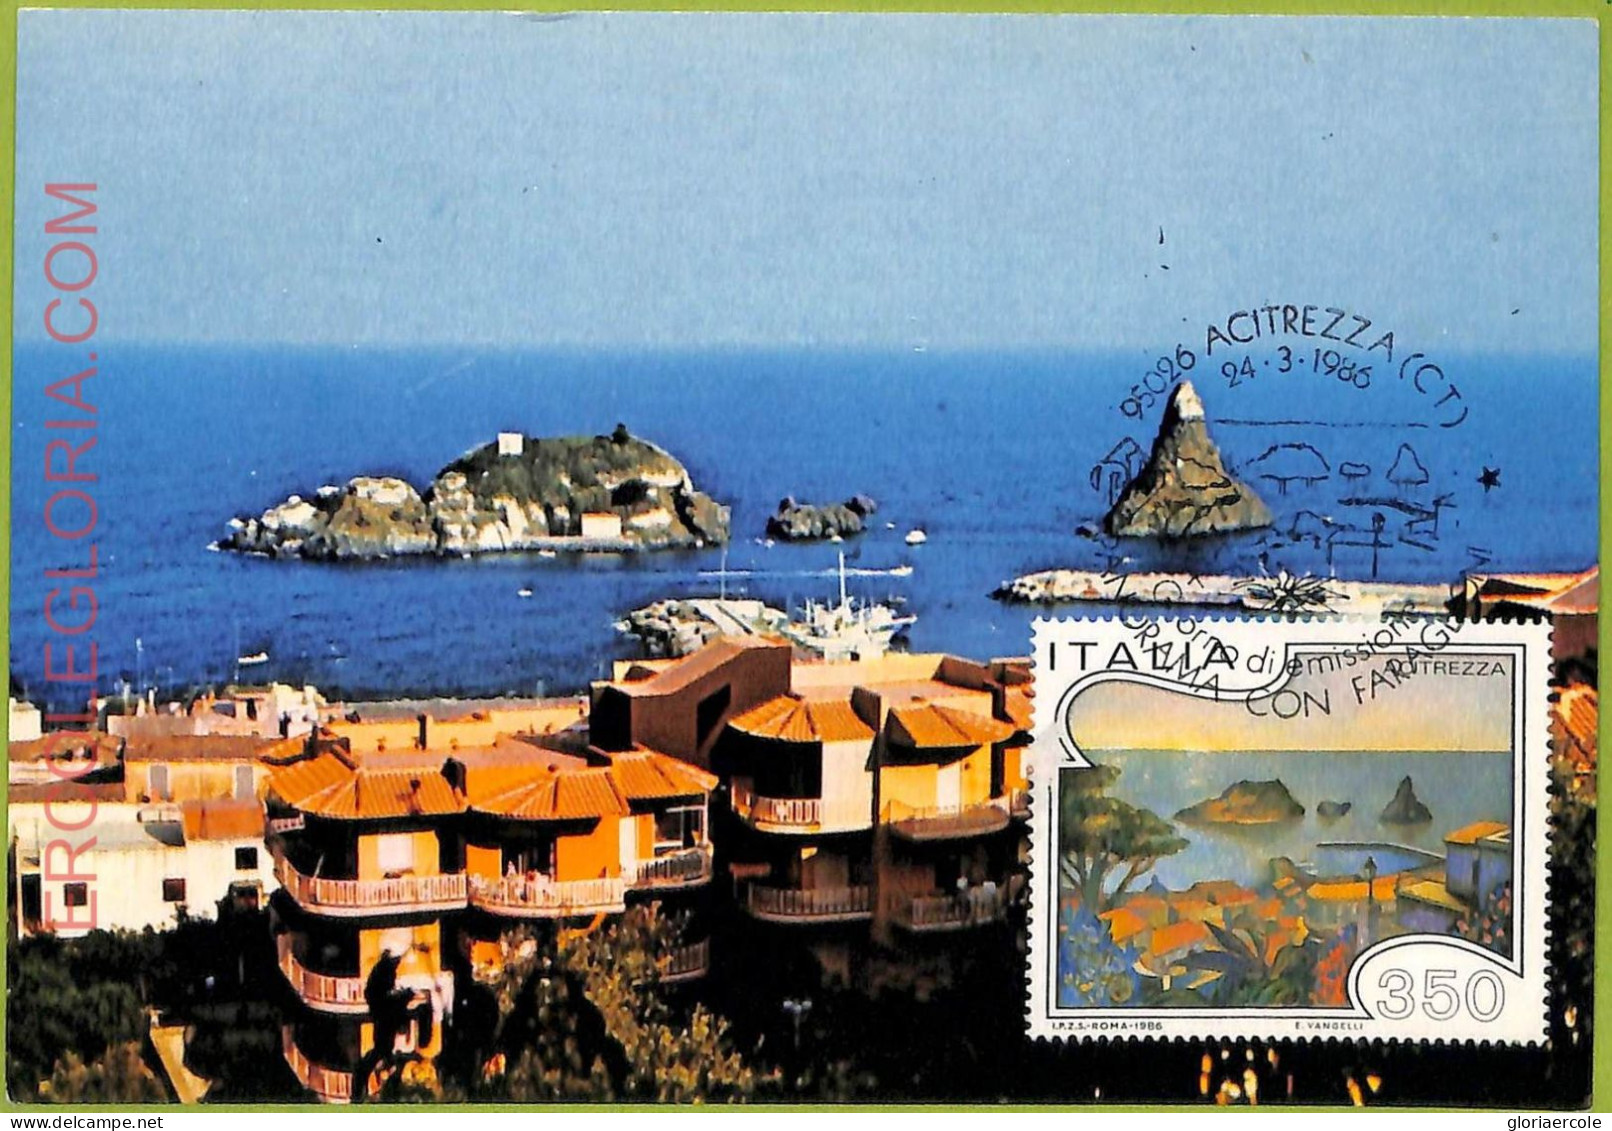 Ad3370 - ITALY - Postal History - MAXIMUM CARD - 1986 - Nature - Cartes-Maximum (CM)